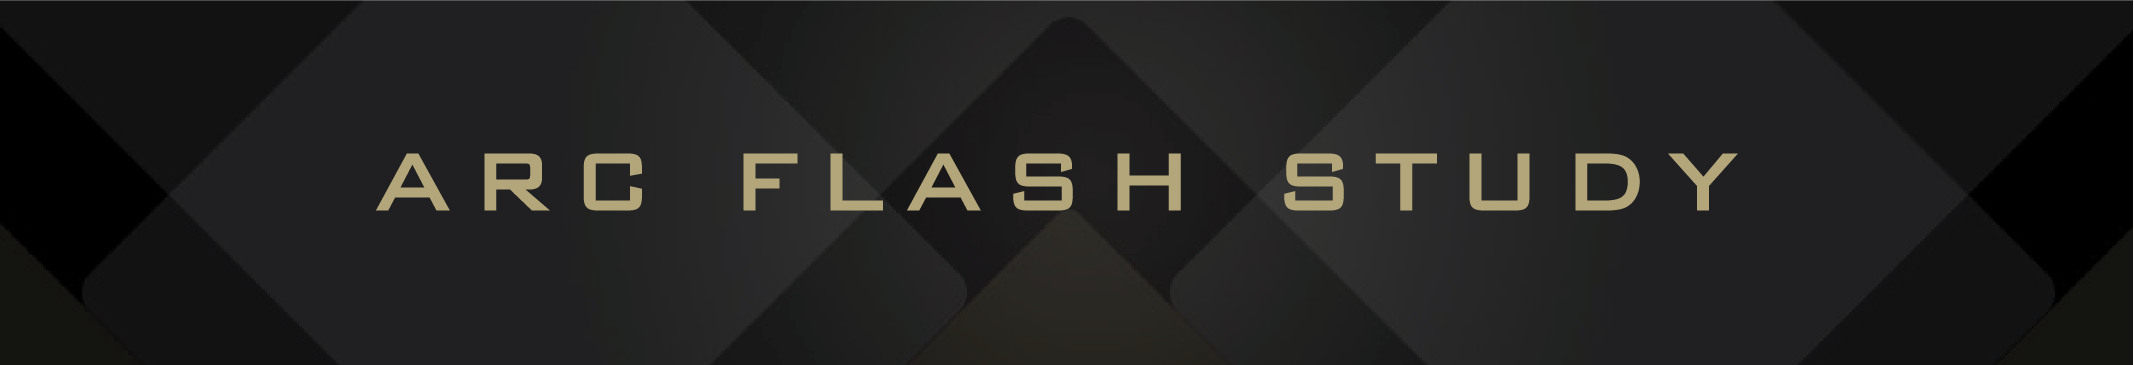 Arc Flash Study Page Banner